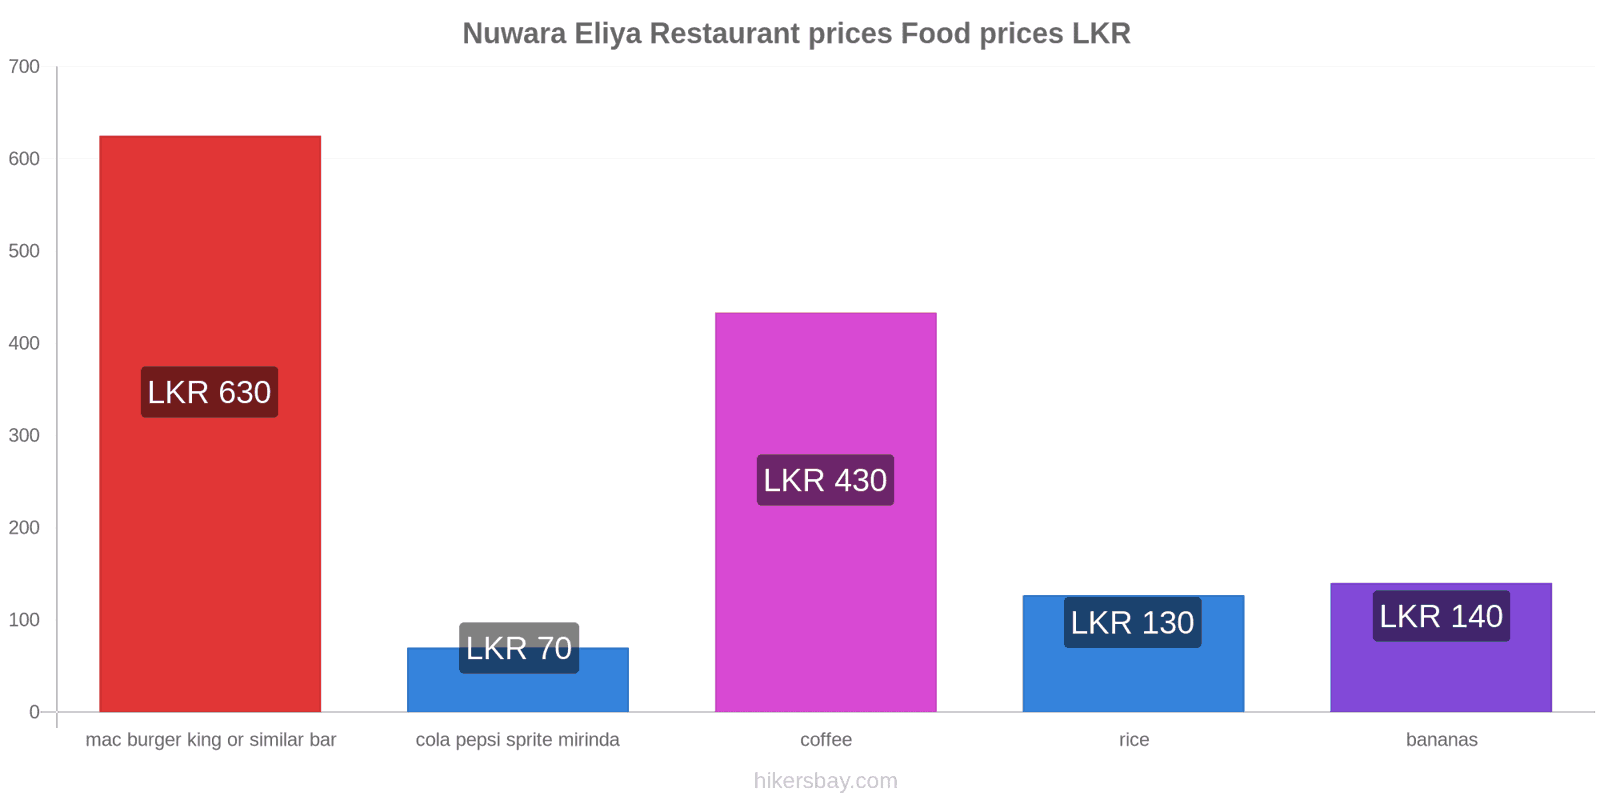 Nuwara Eliya price changes hikersbay.com